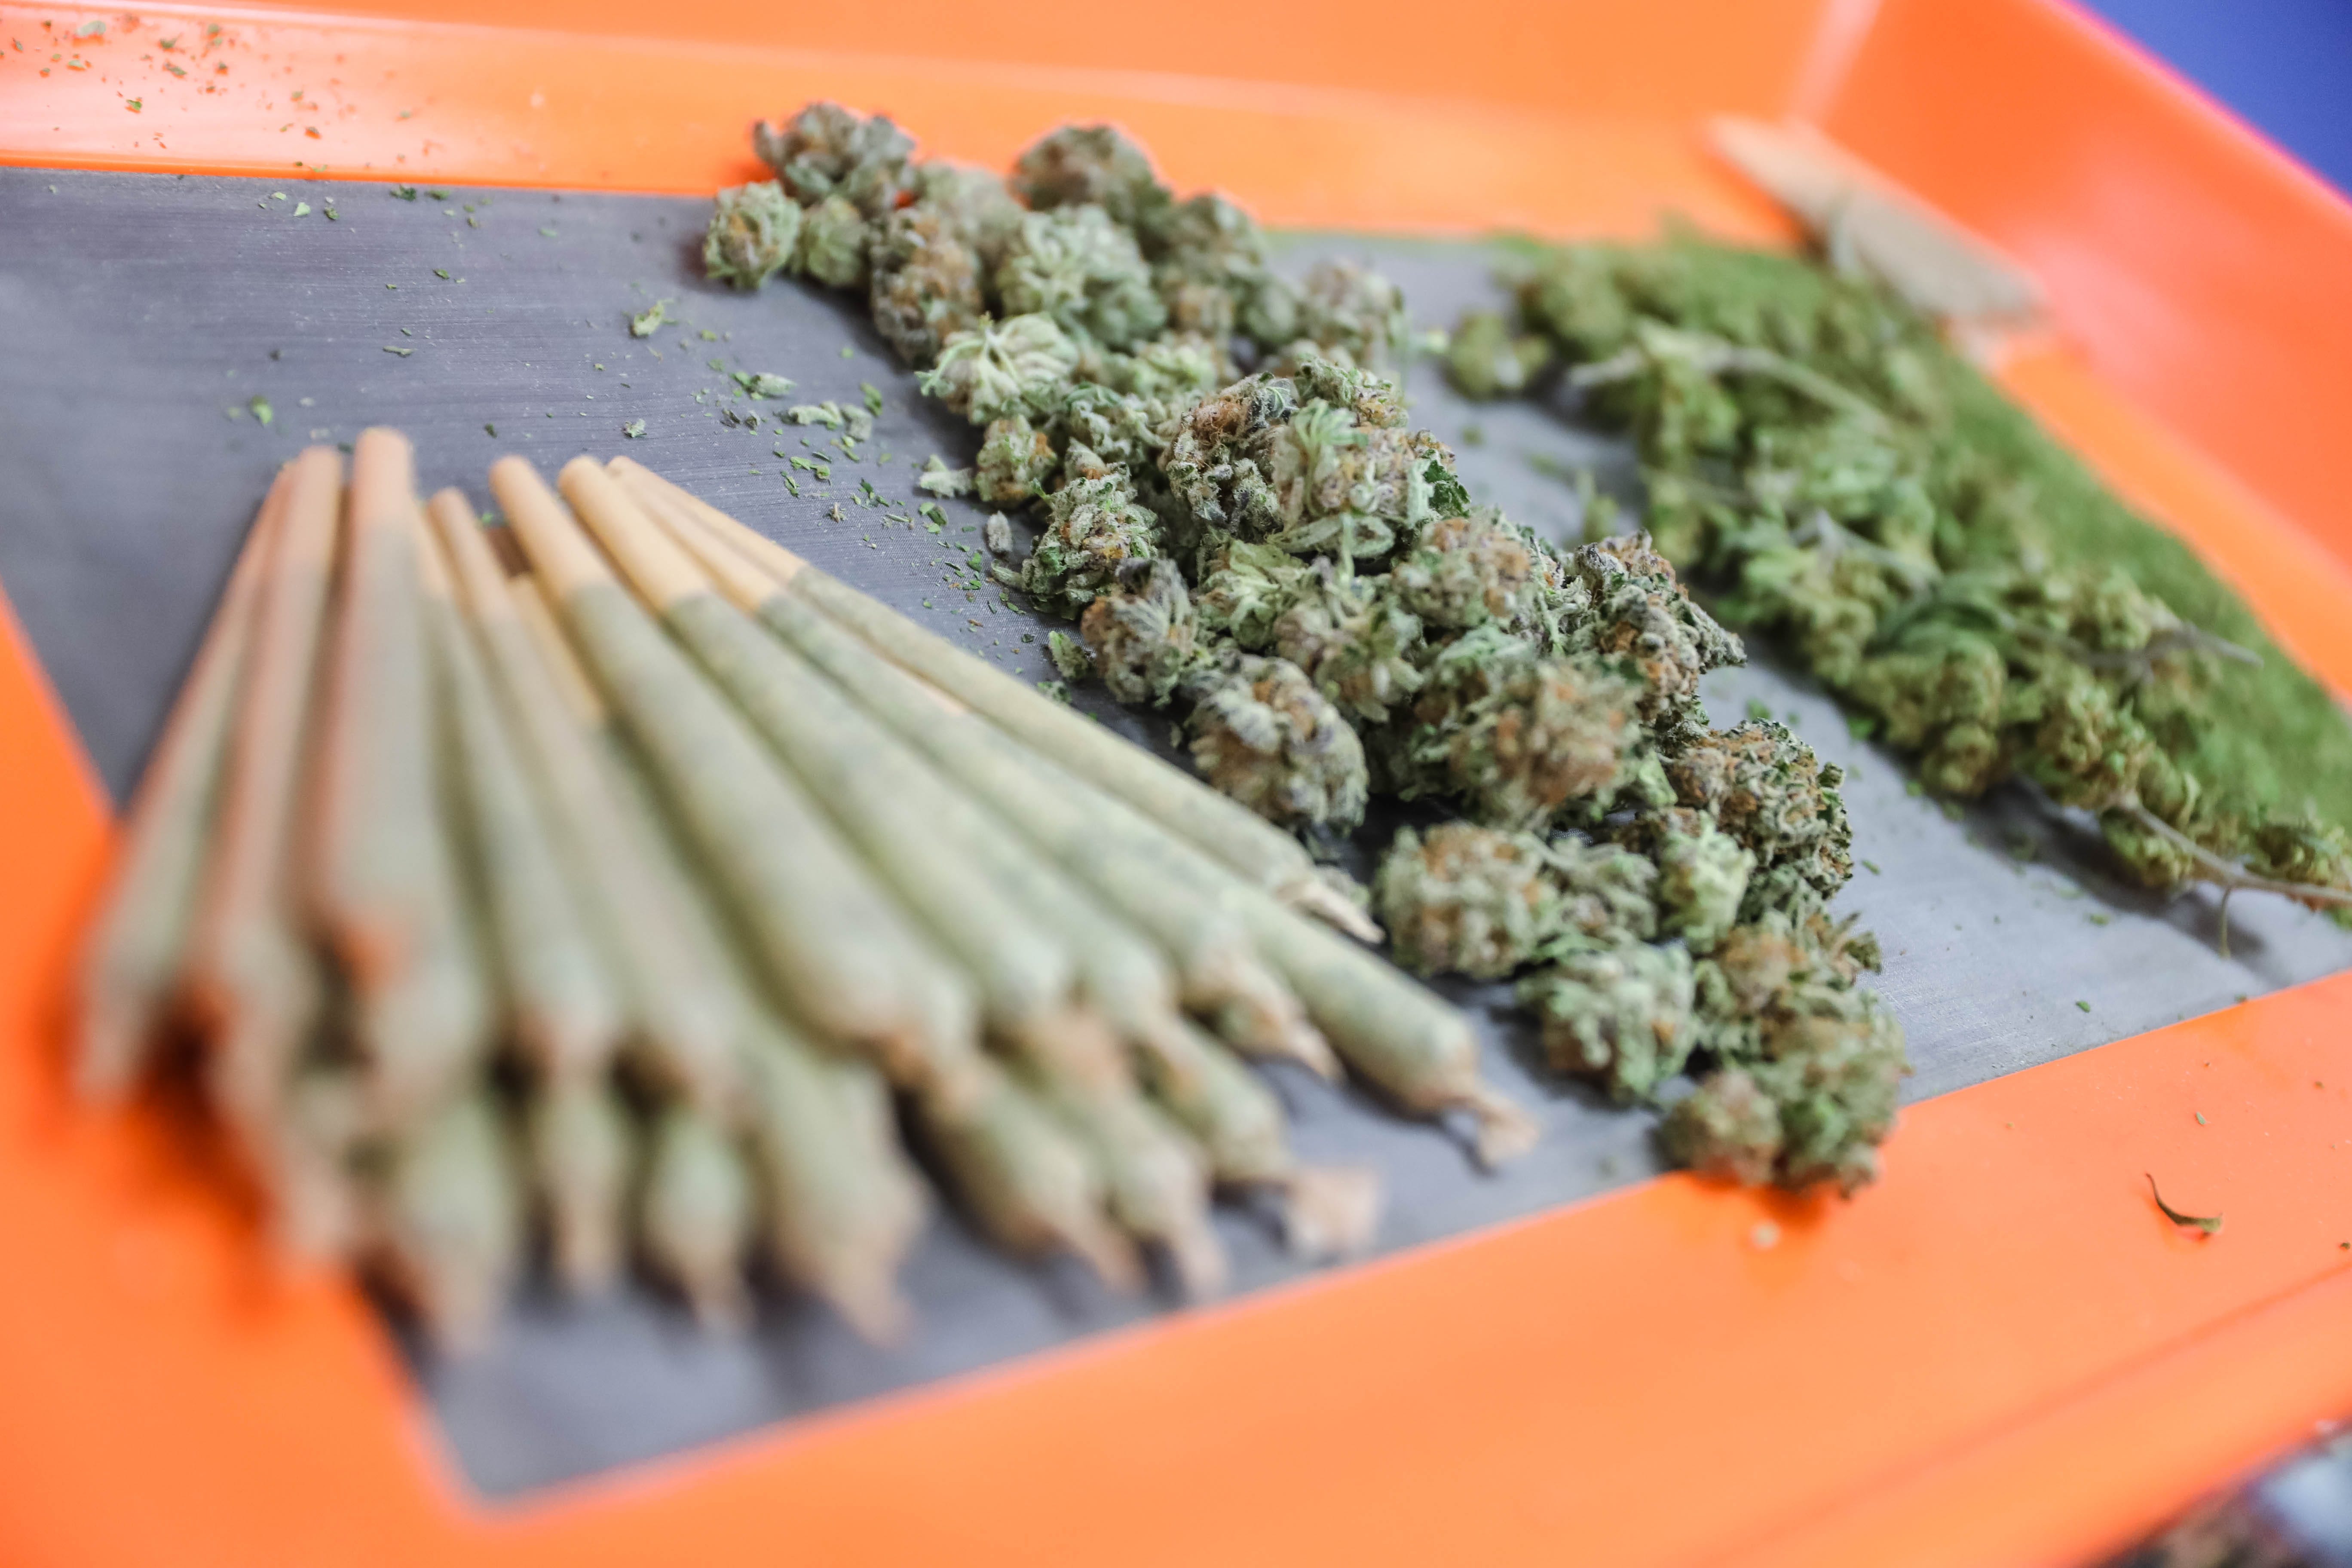 Will Fryeburg become the new marijuana mecca? - Local News -  conwaydailysun.com